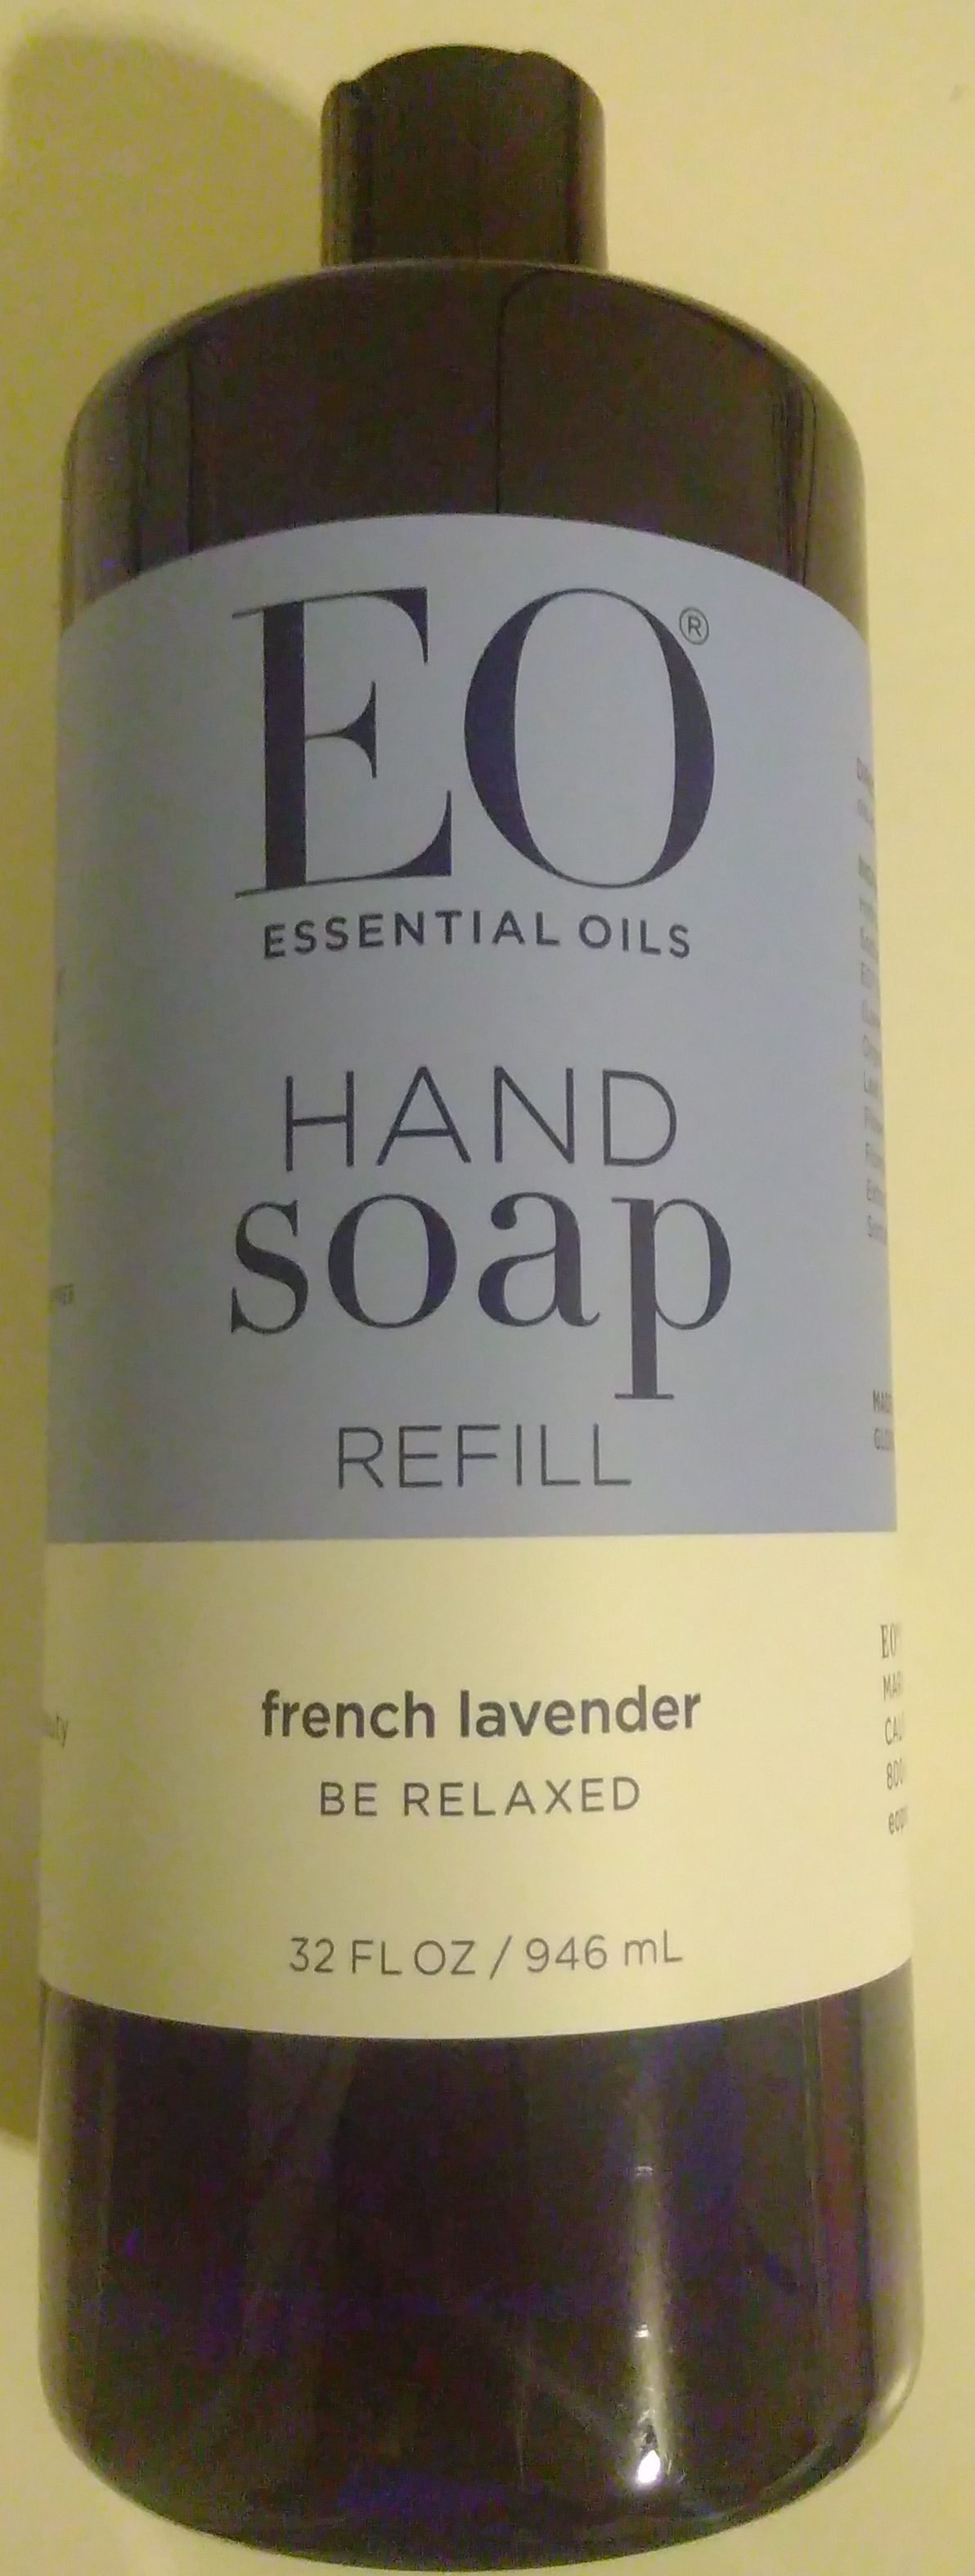 Hand soap - Product - en